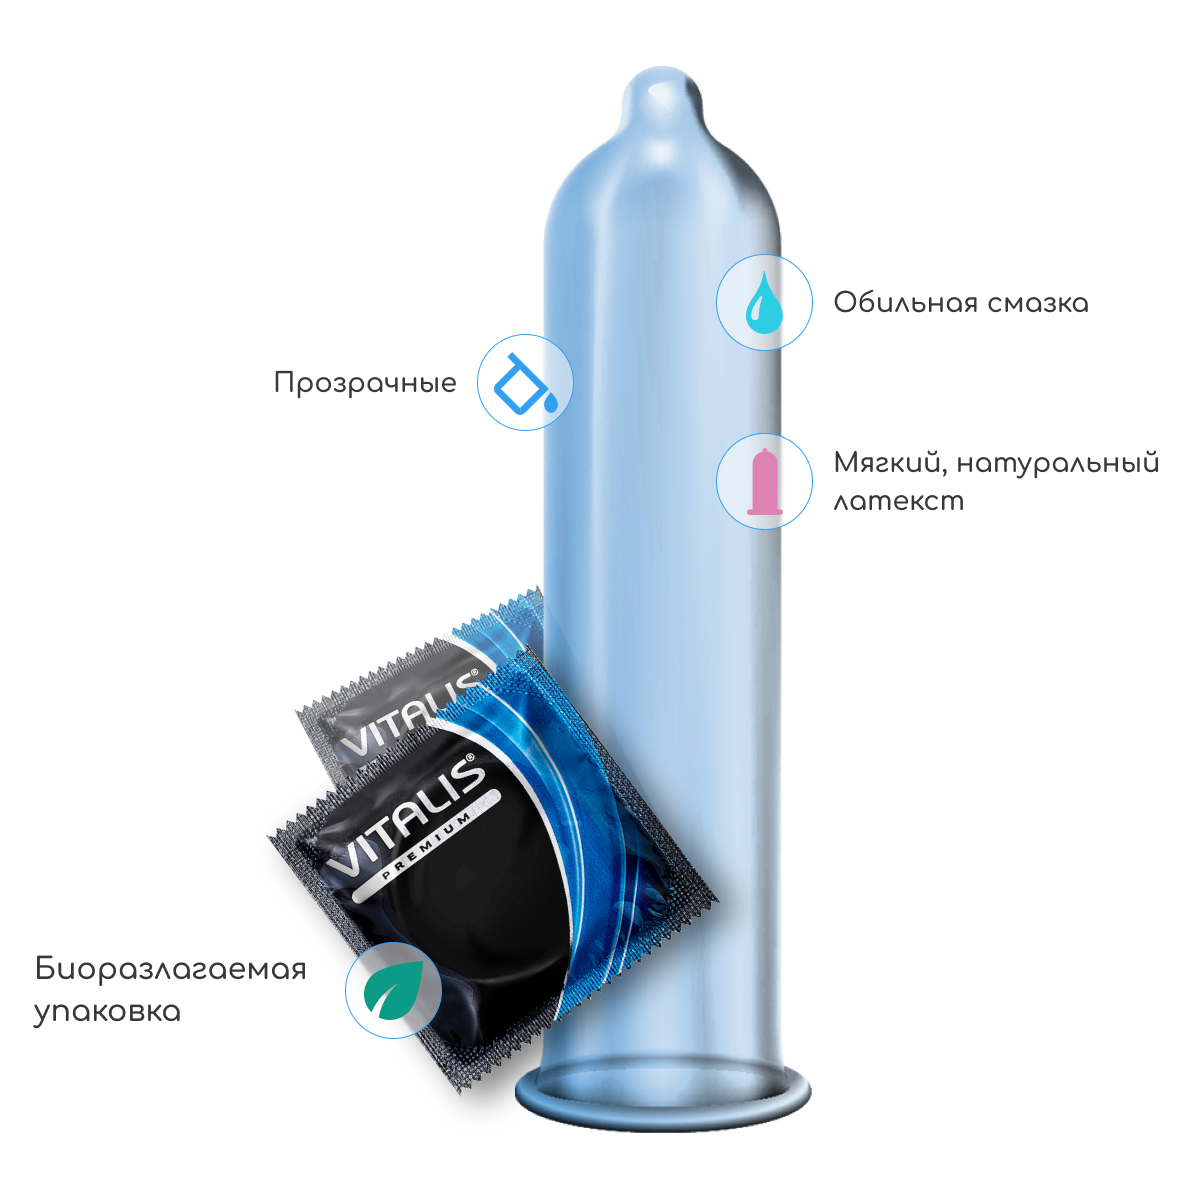 Набор презервативов Vitalis Premium Mix, 15 шт